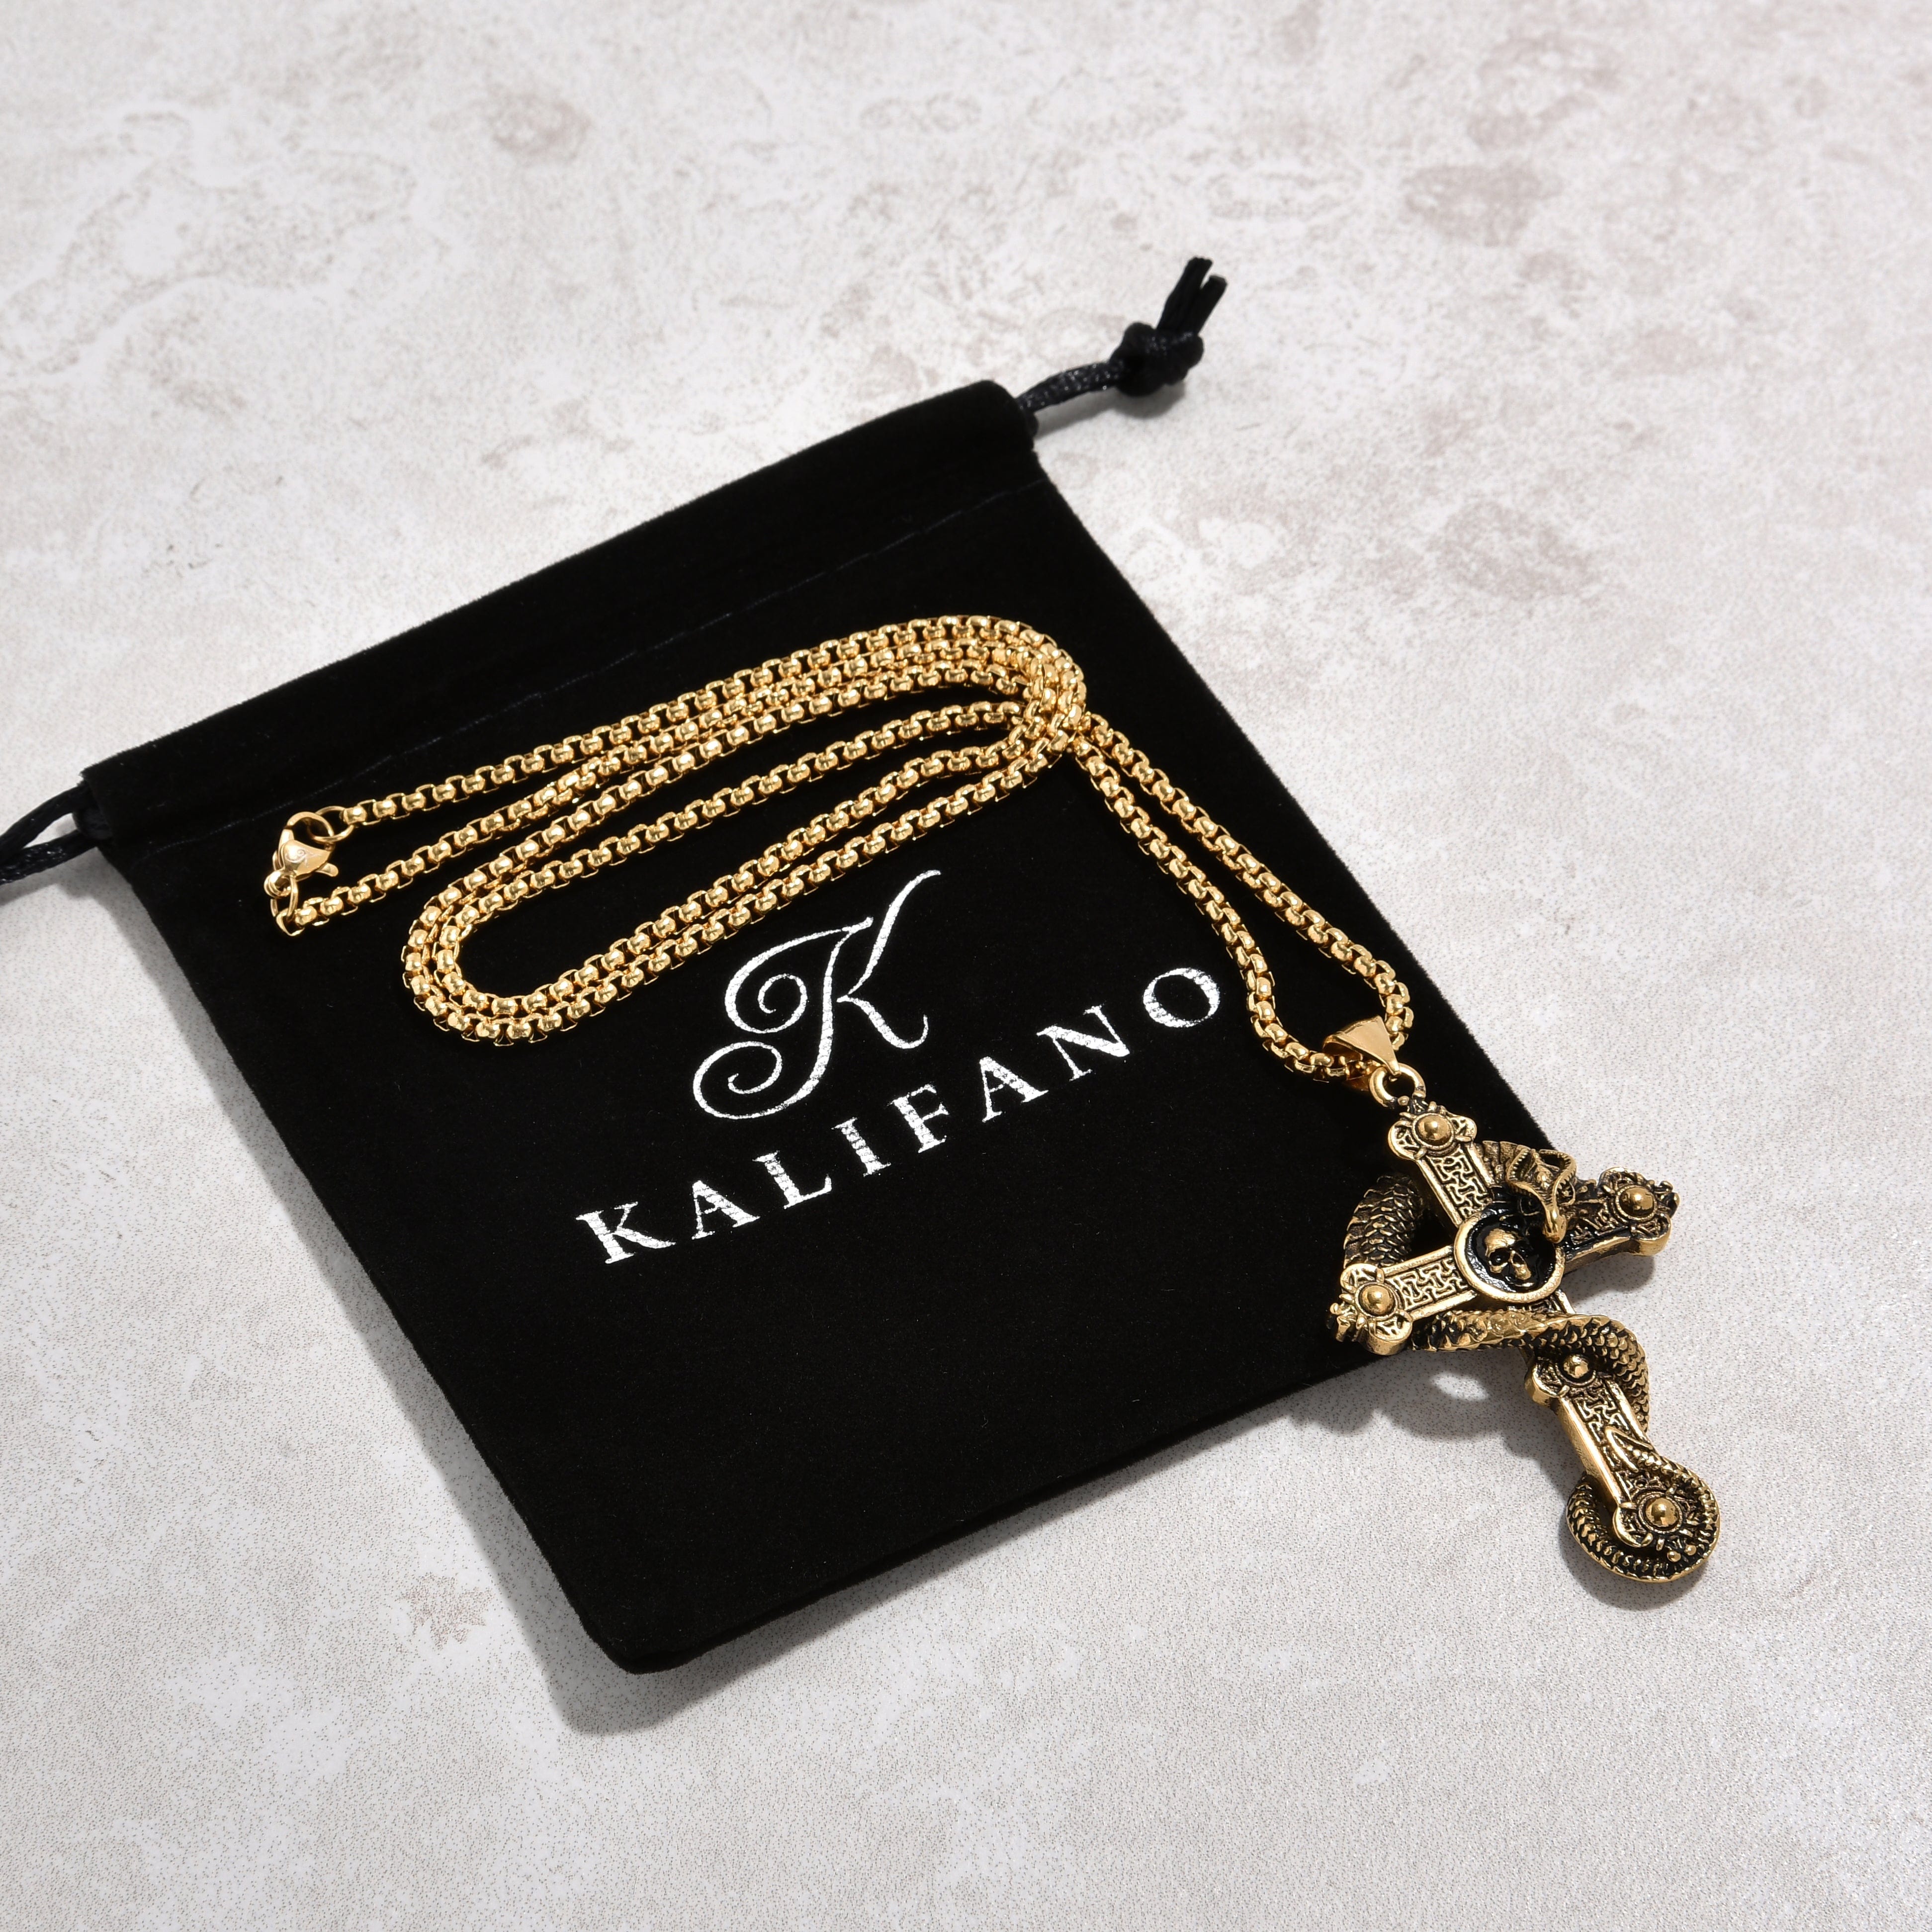 Kalifano Steel Hearts Jewelry Gold Dragon Cross Steel Hearts Necklace SHN515-G